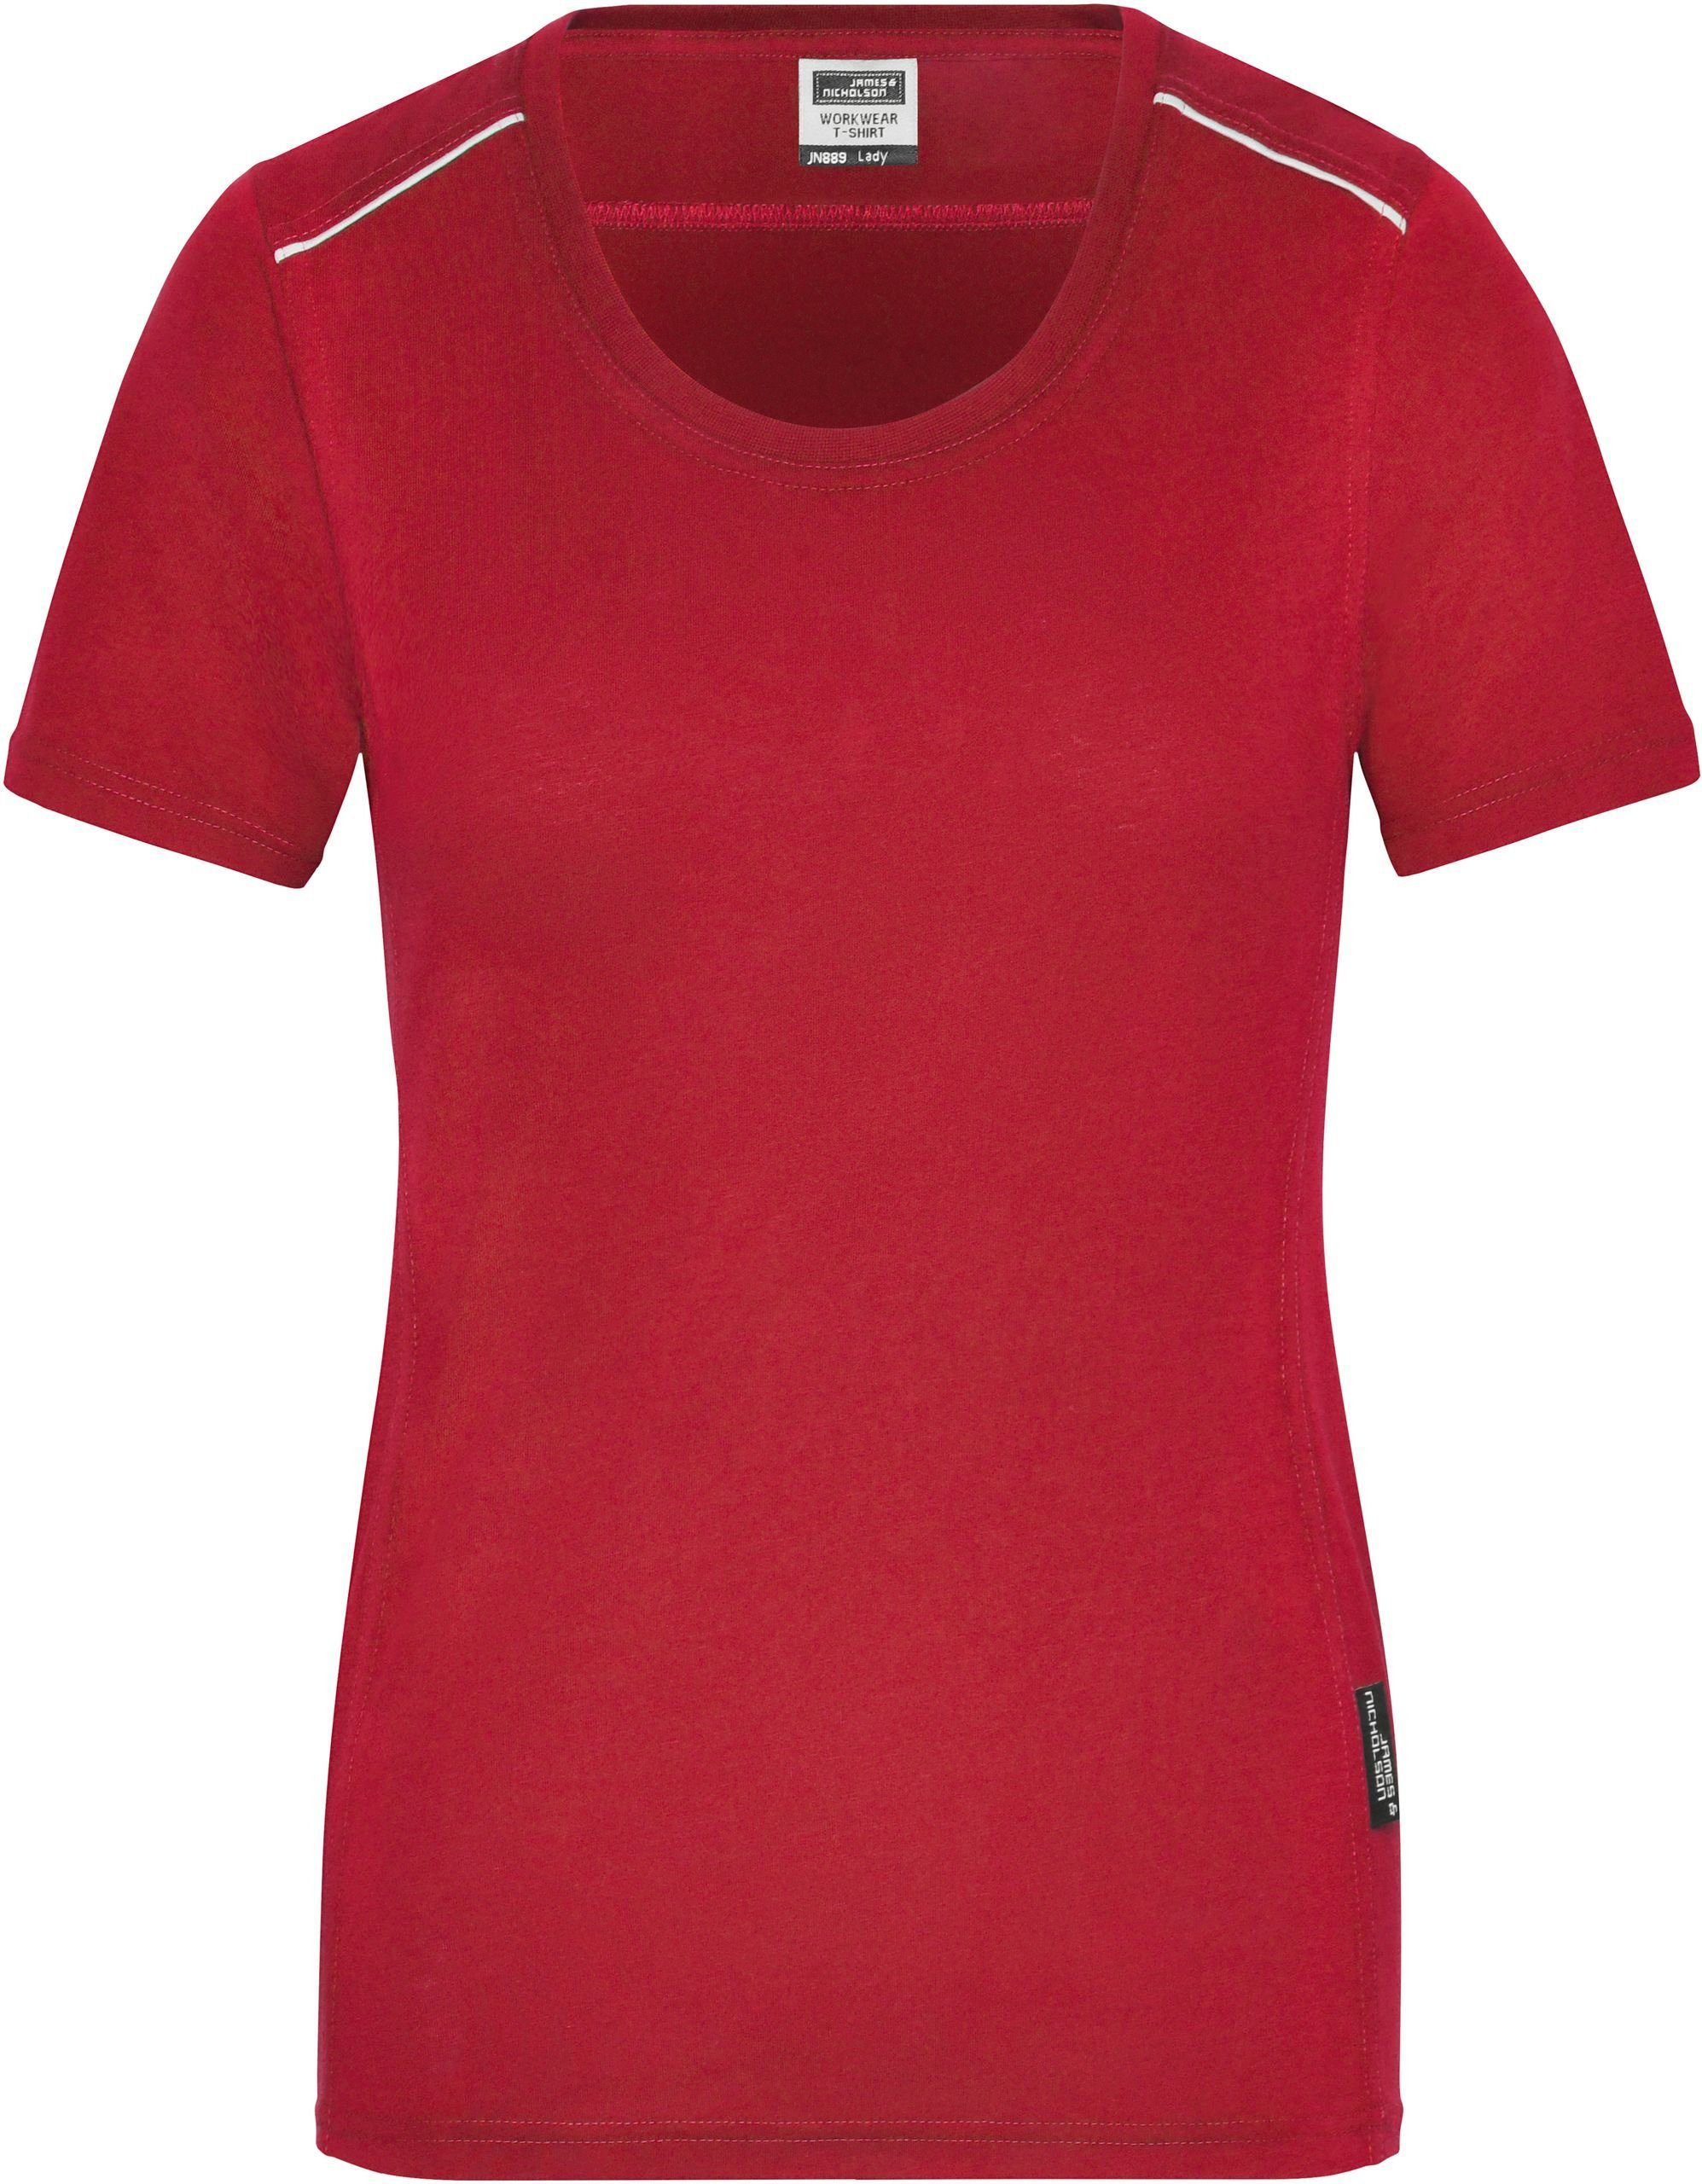 James & Nicholson Bio T-Shirt Navy Workwear FaS50889 Arbeits T-Shirt Baumwolle -Solid